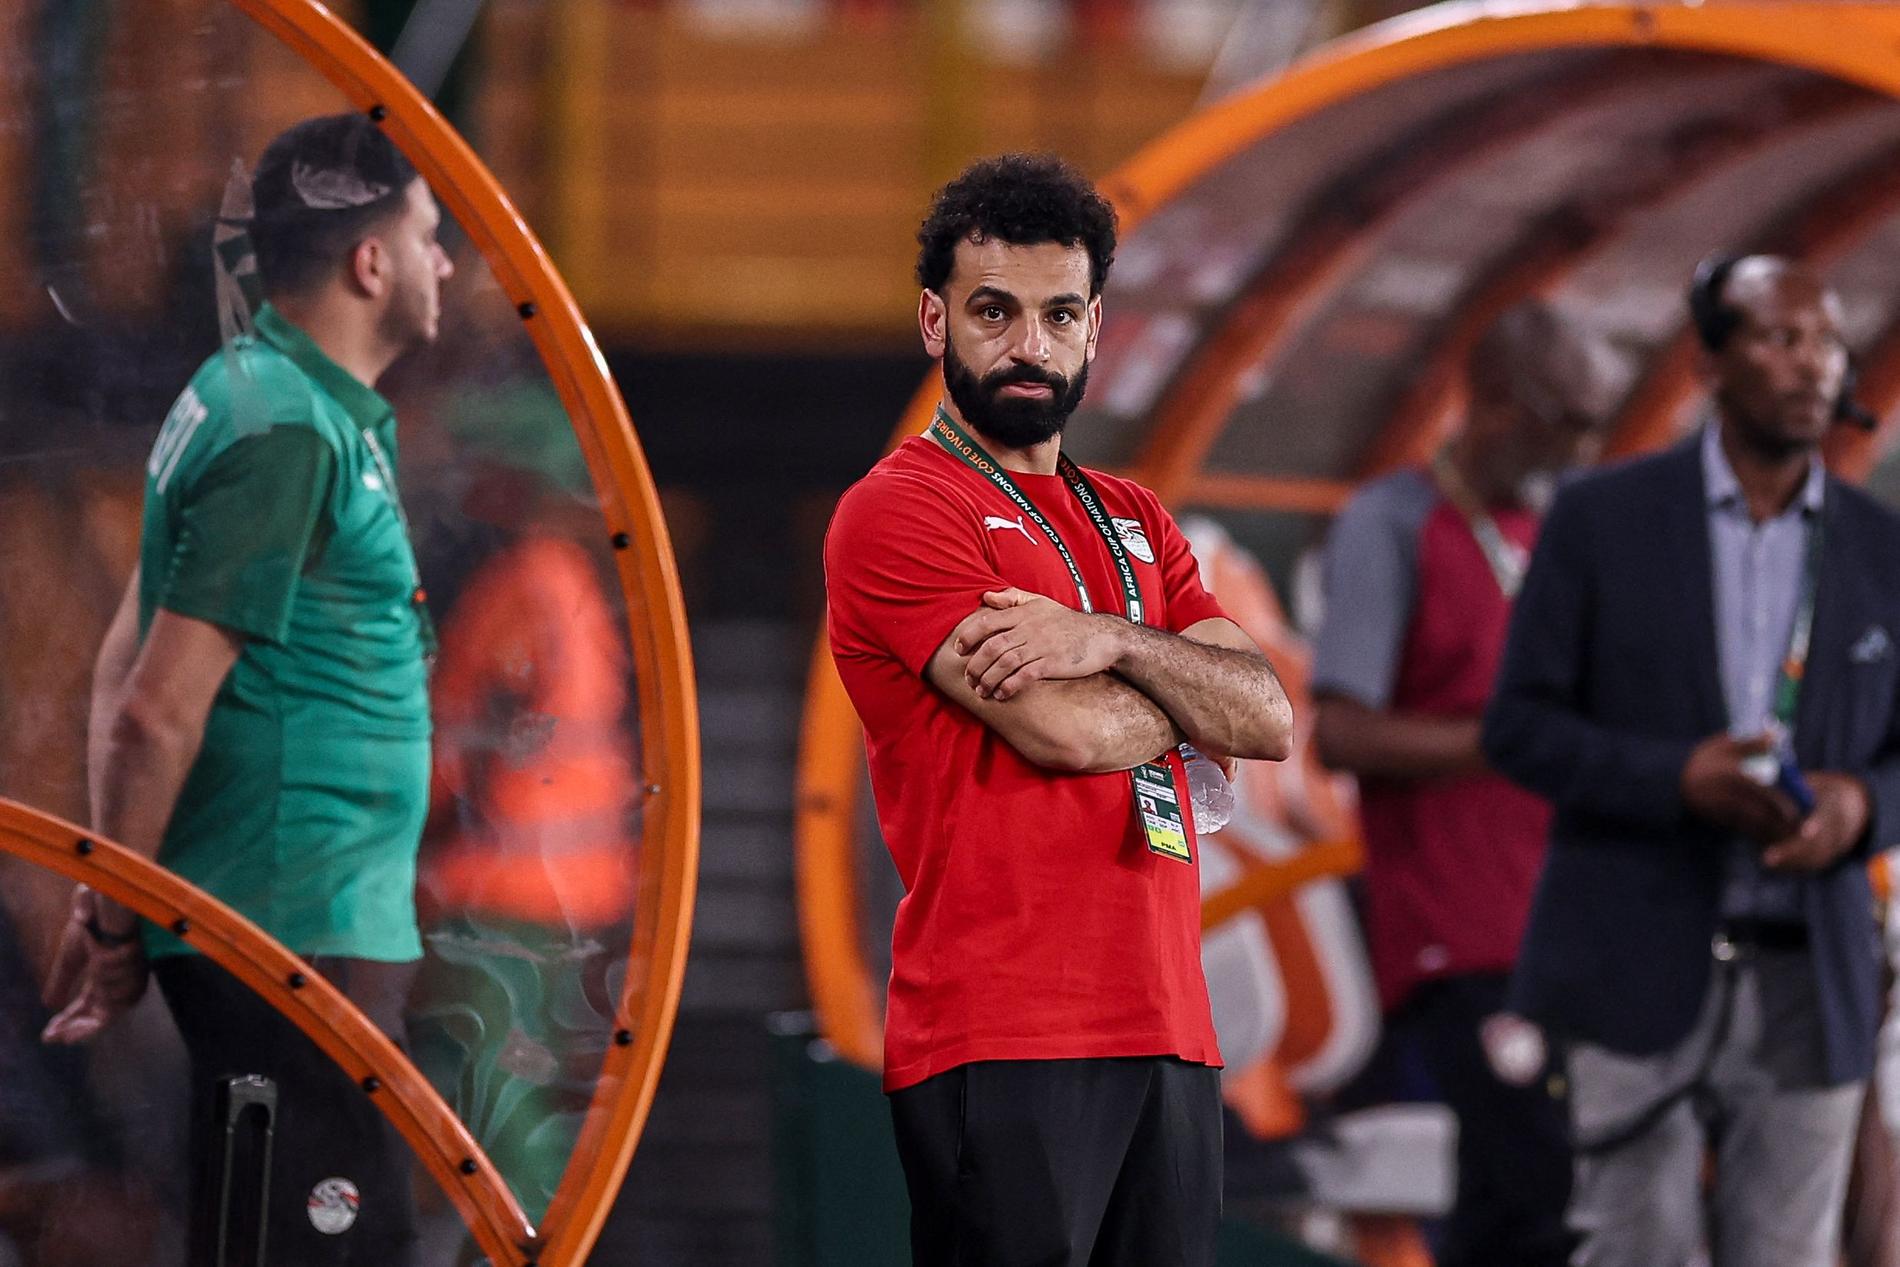 Liverpool-assistent Pep Lijnders avviser beskyldninger rundt Salah-exit